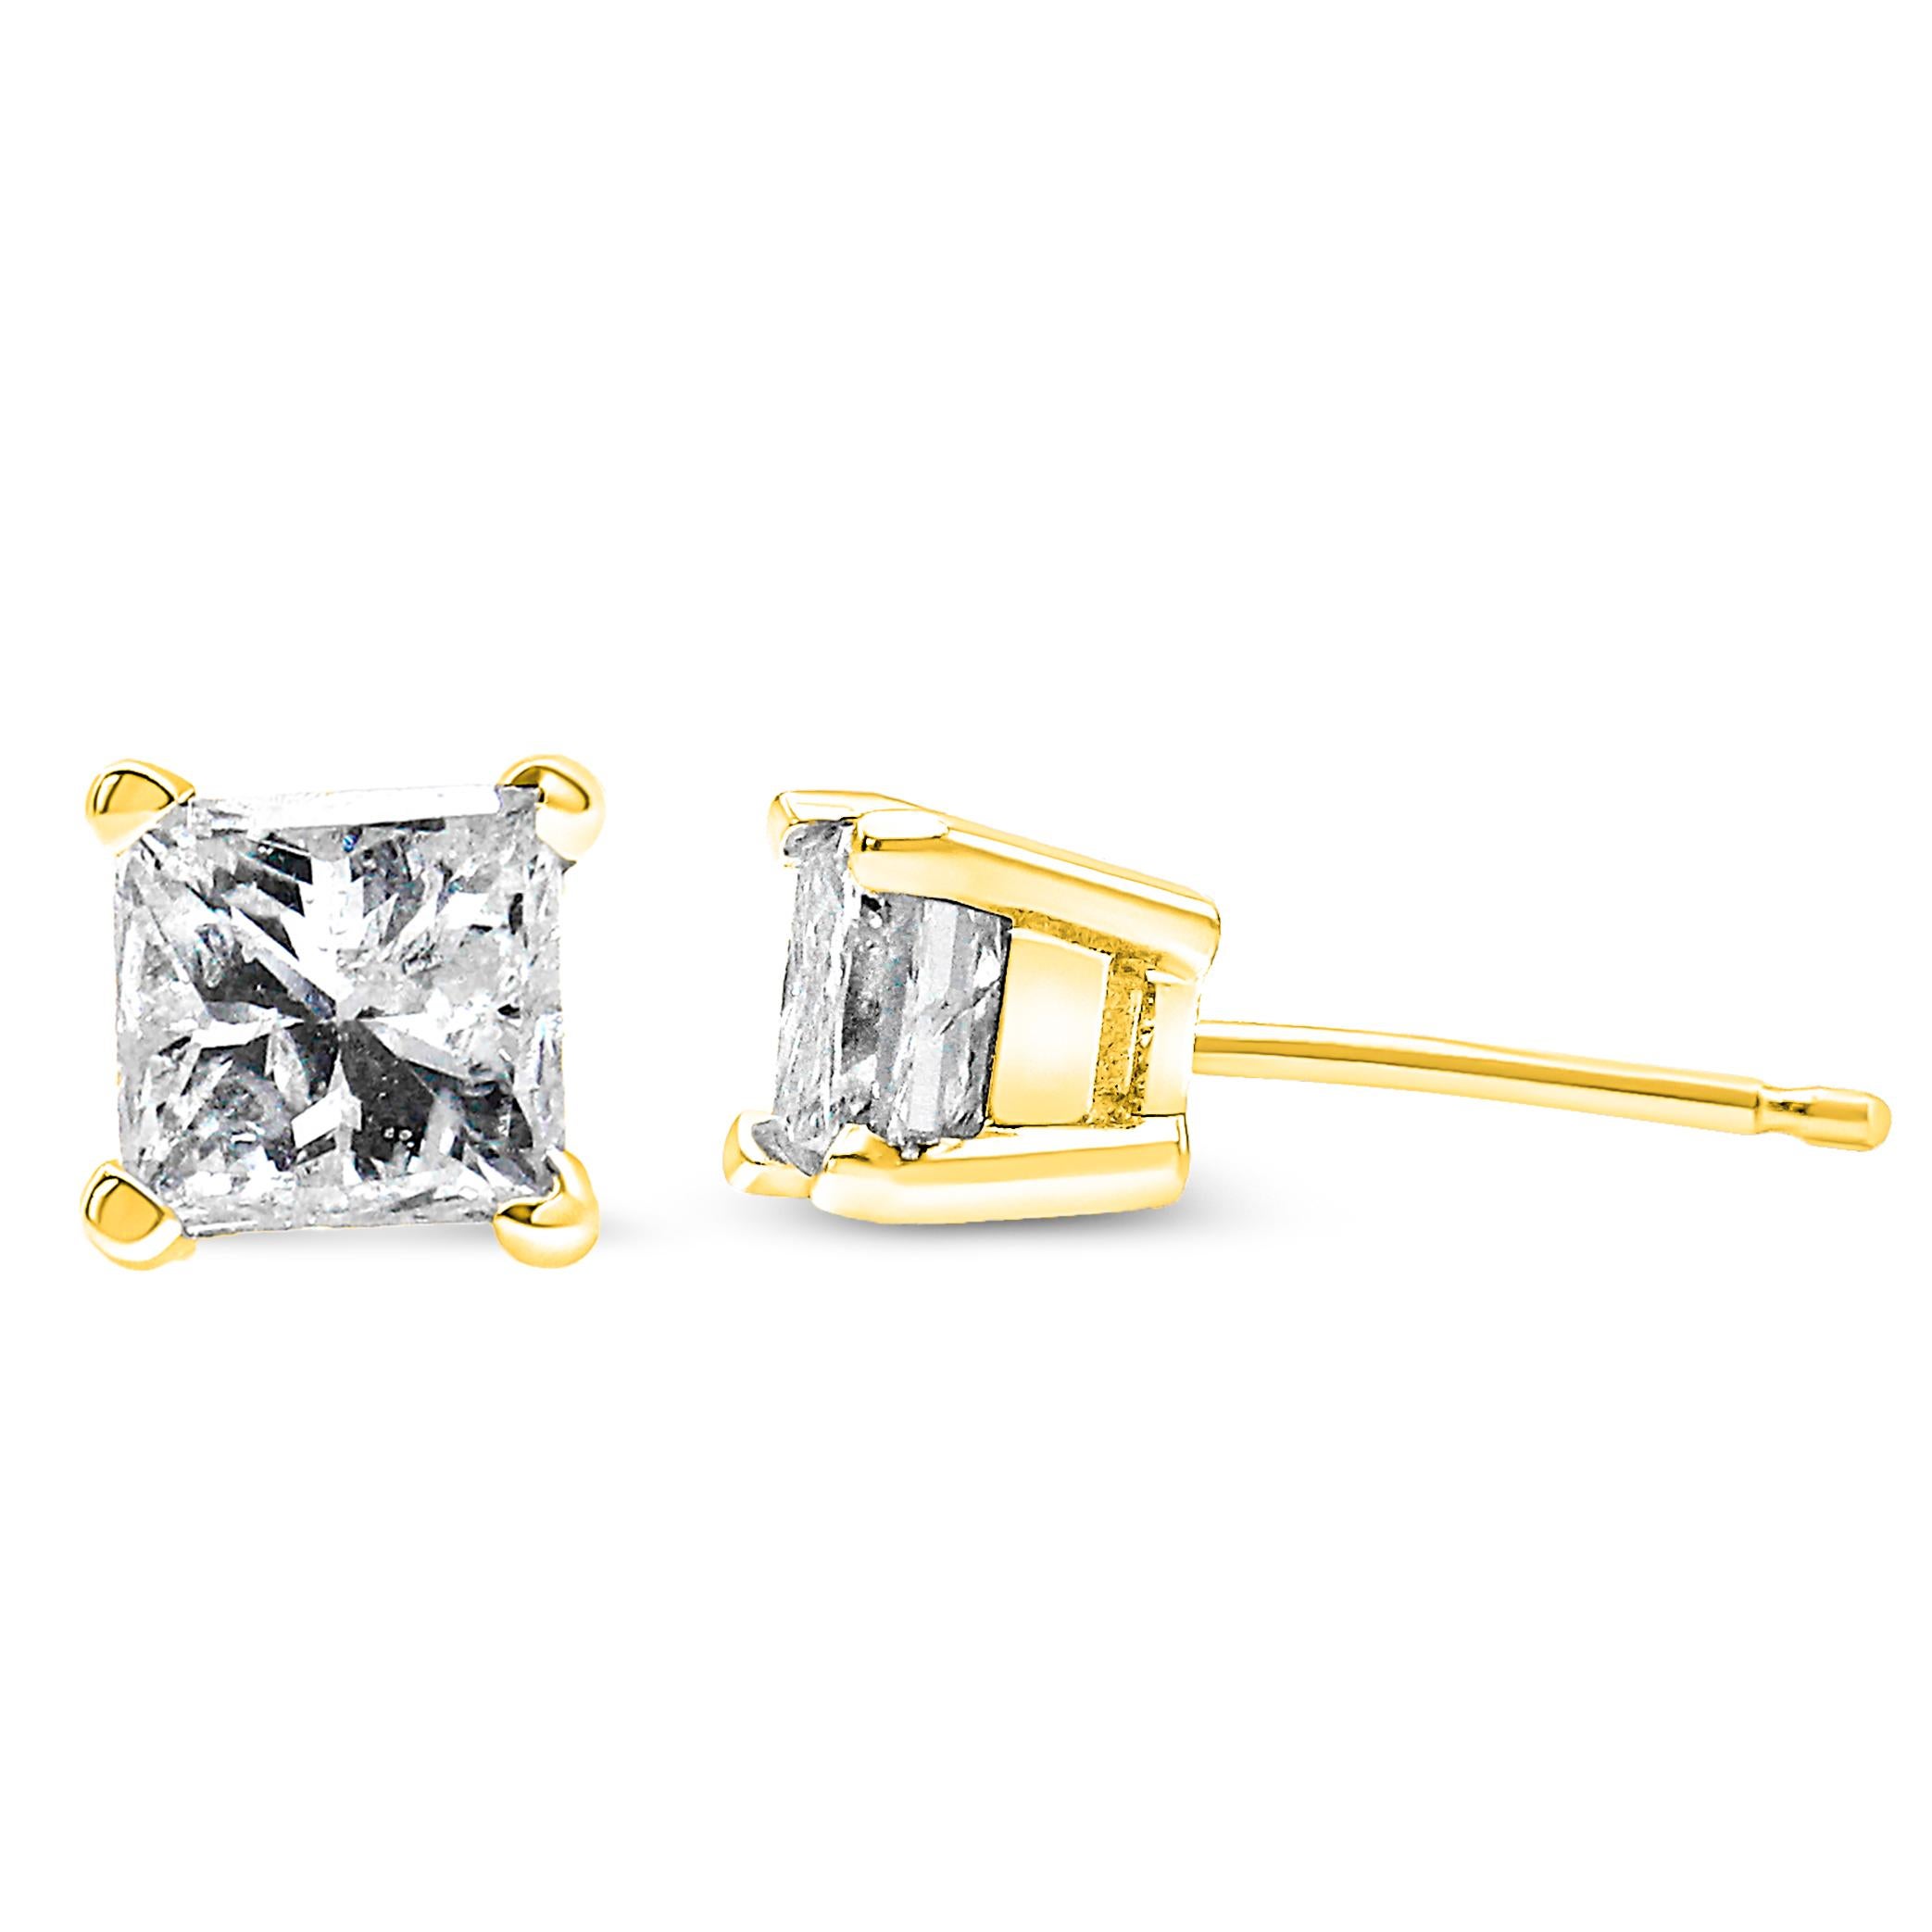 1/4 carat diamond earrings